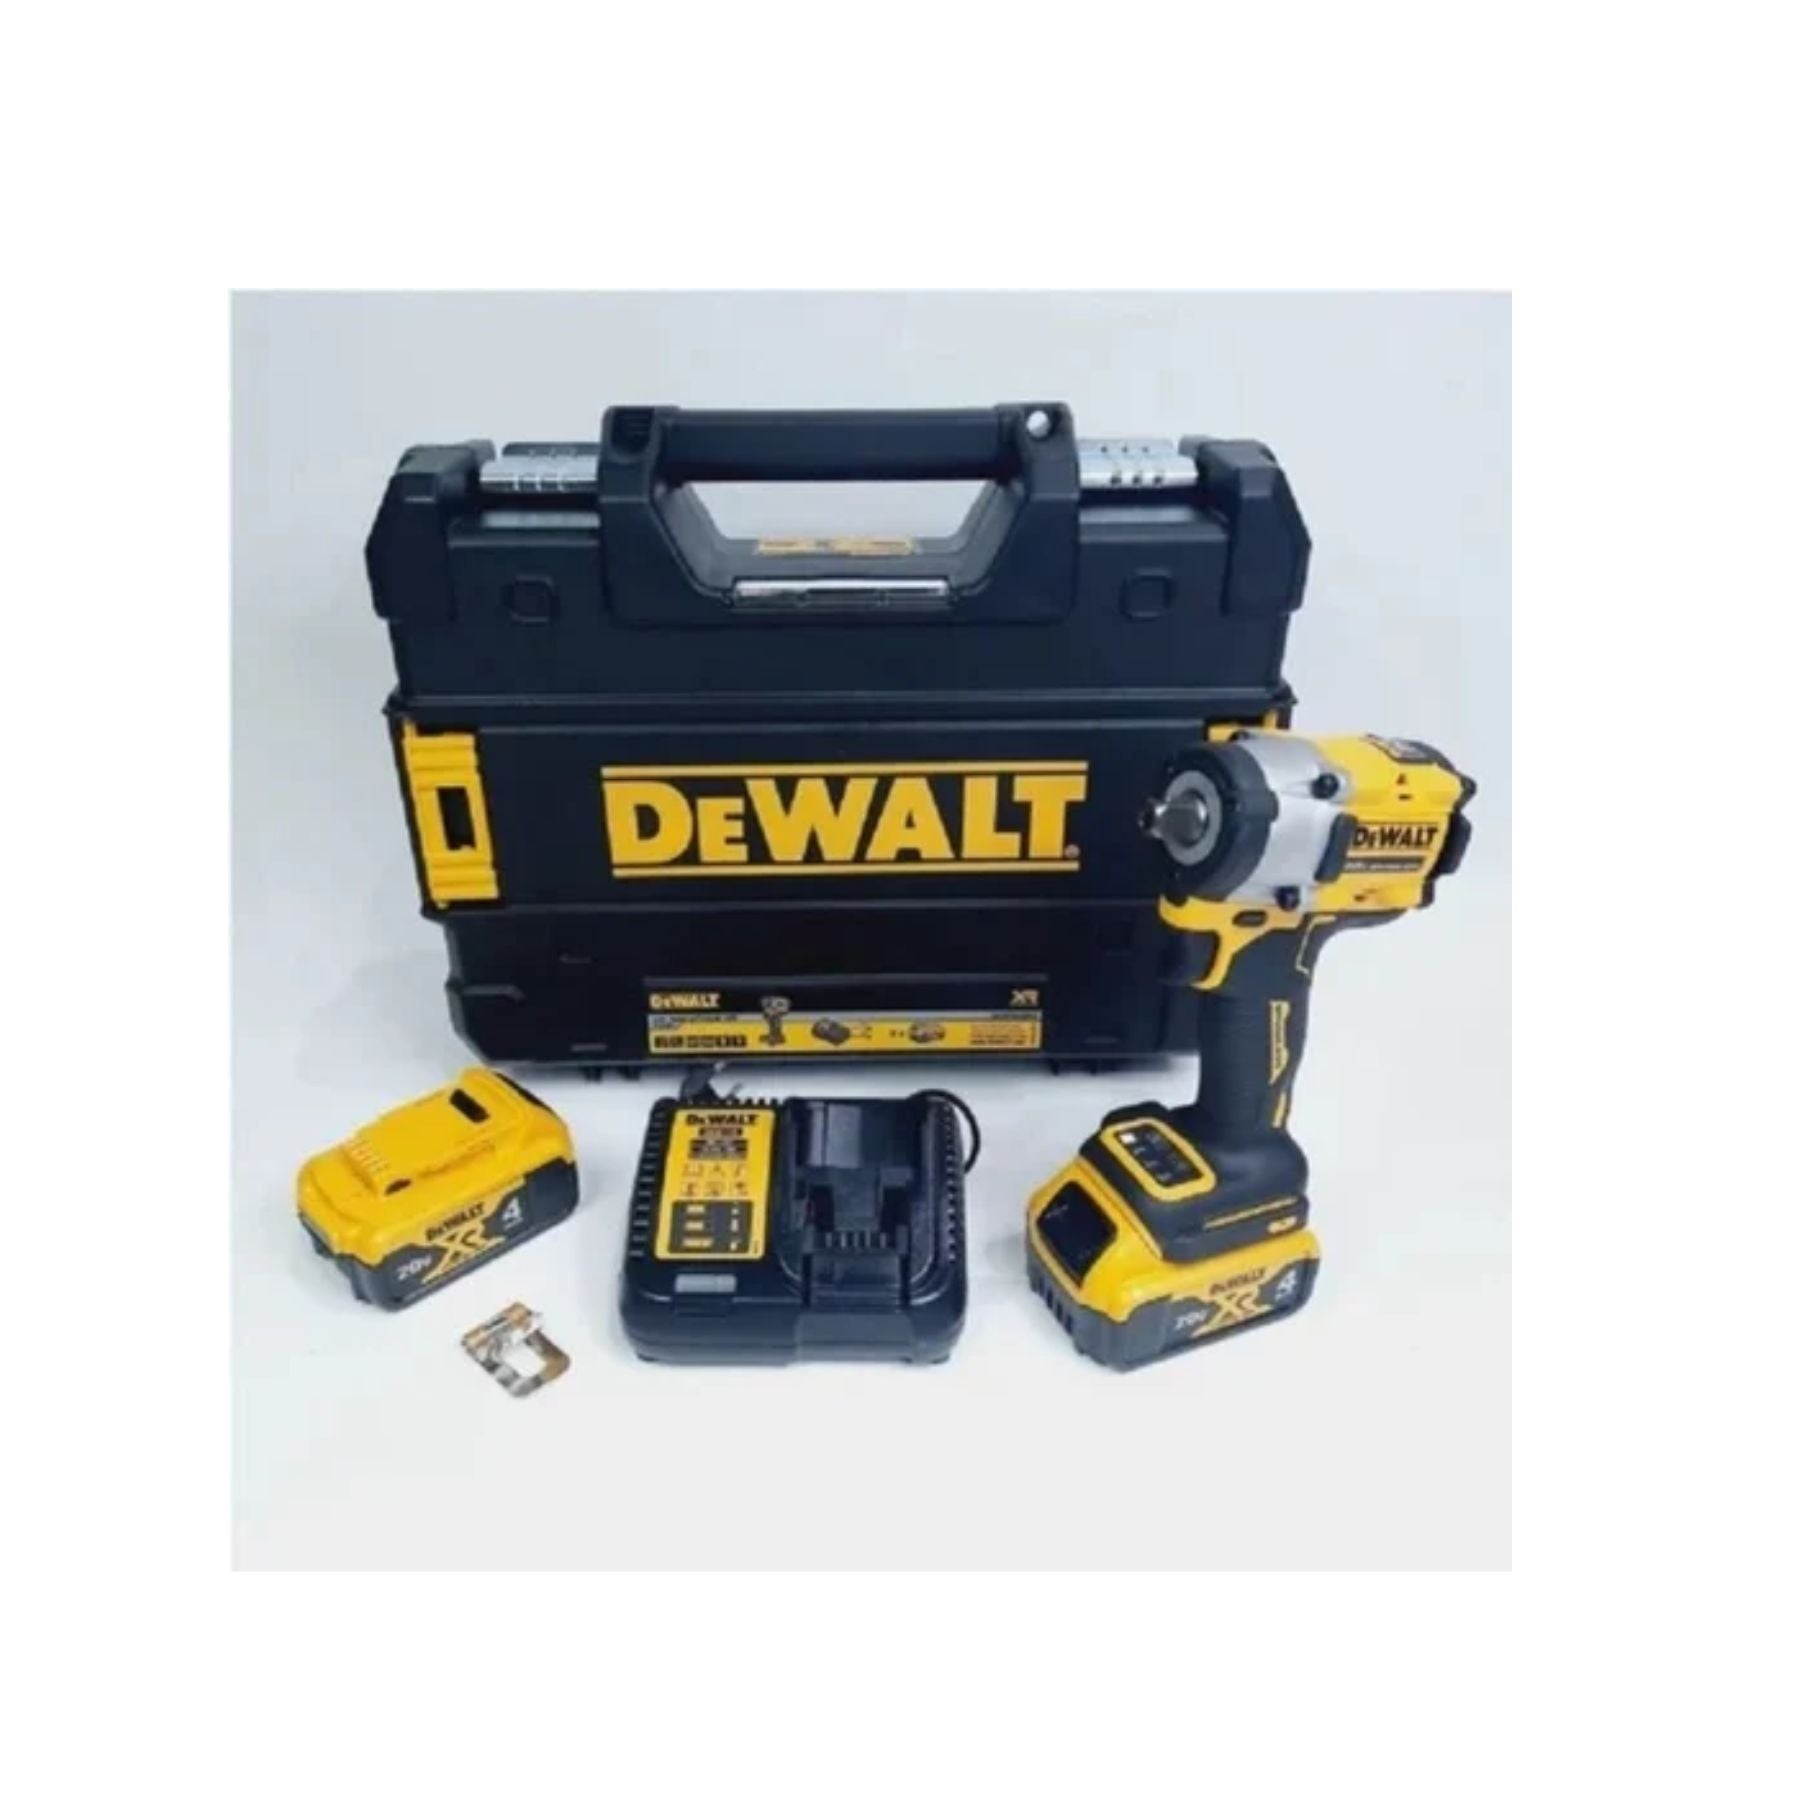 Dewalt (DCF922M2) 20V Max 4.0AH Compact Impact Wrench